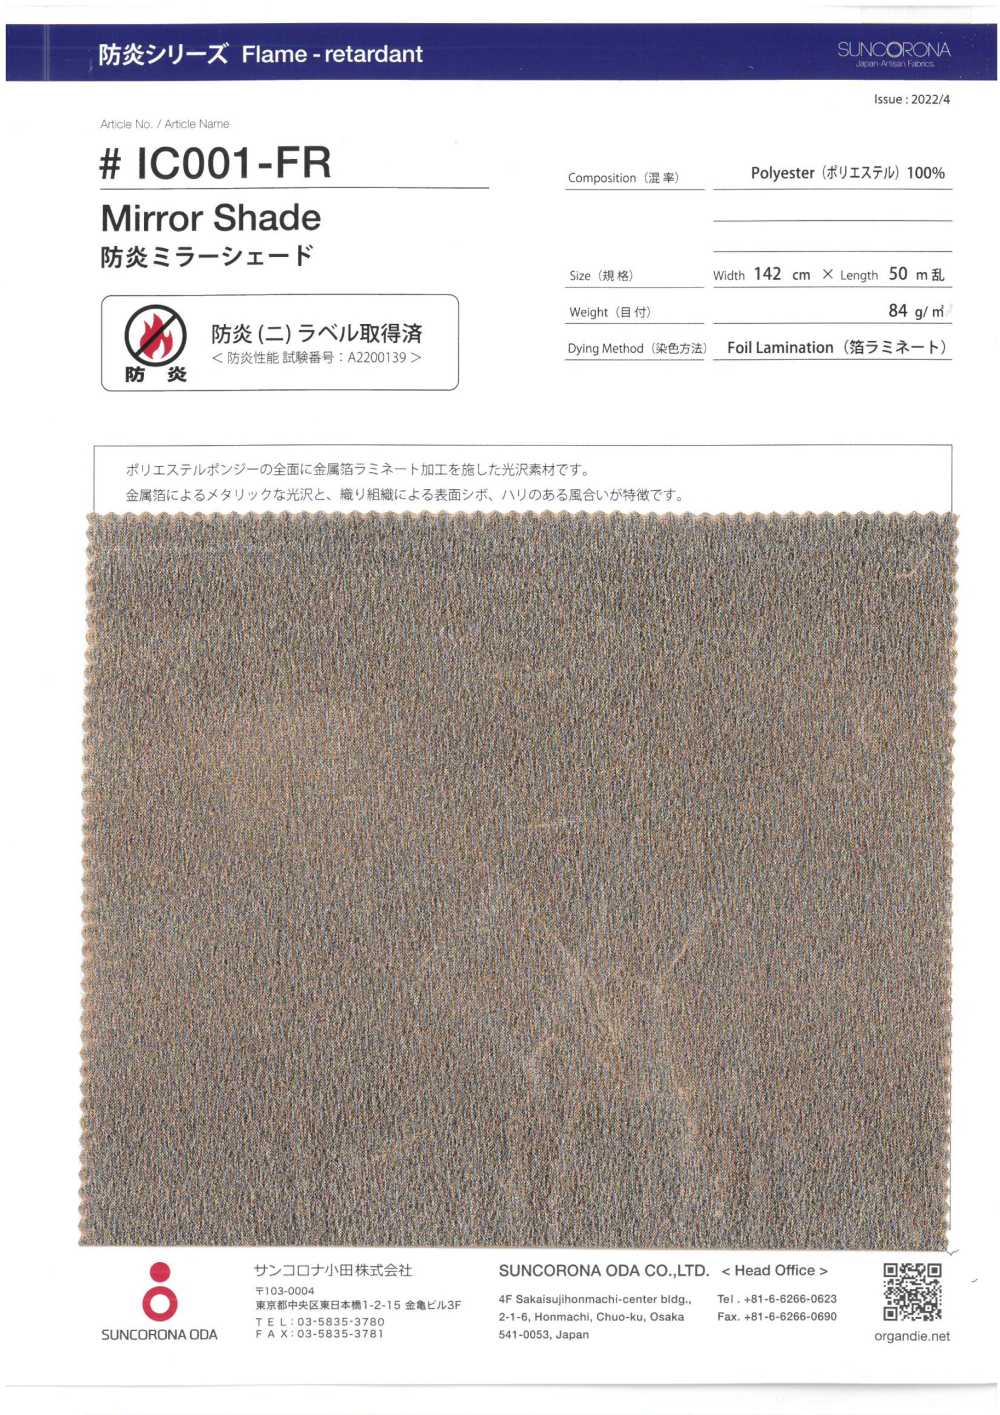 IC001-FR Flame Retardant Mirror Shade[Textile / Fabric] Suncorona Oda